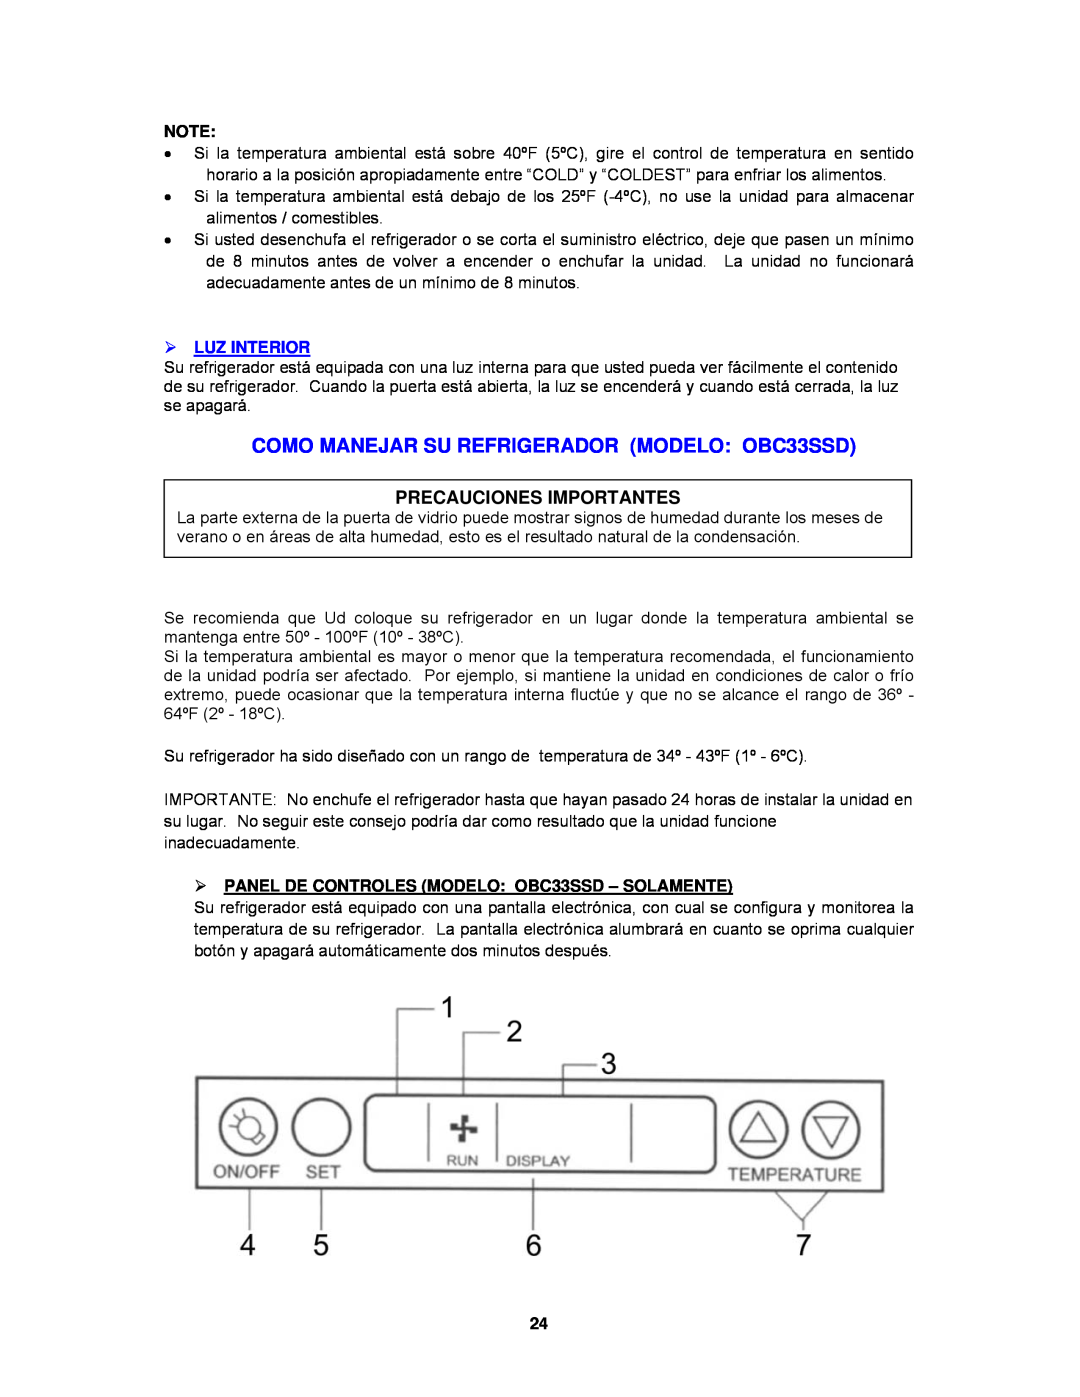 Avanti OBC32SS instruction manual COMO MANEJAR SU REFRIGERADOR MODELO OBC33SSD, Precauciones Importantes 